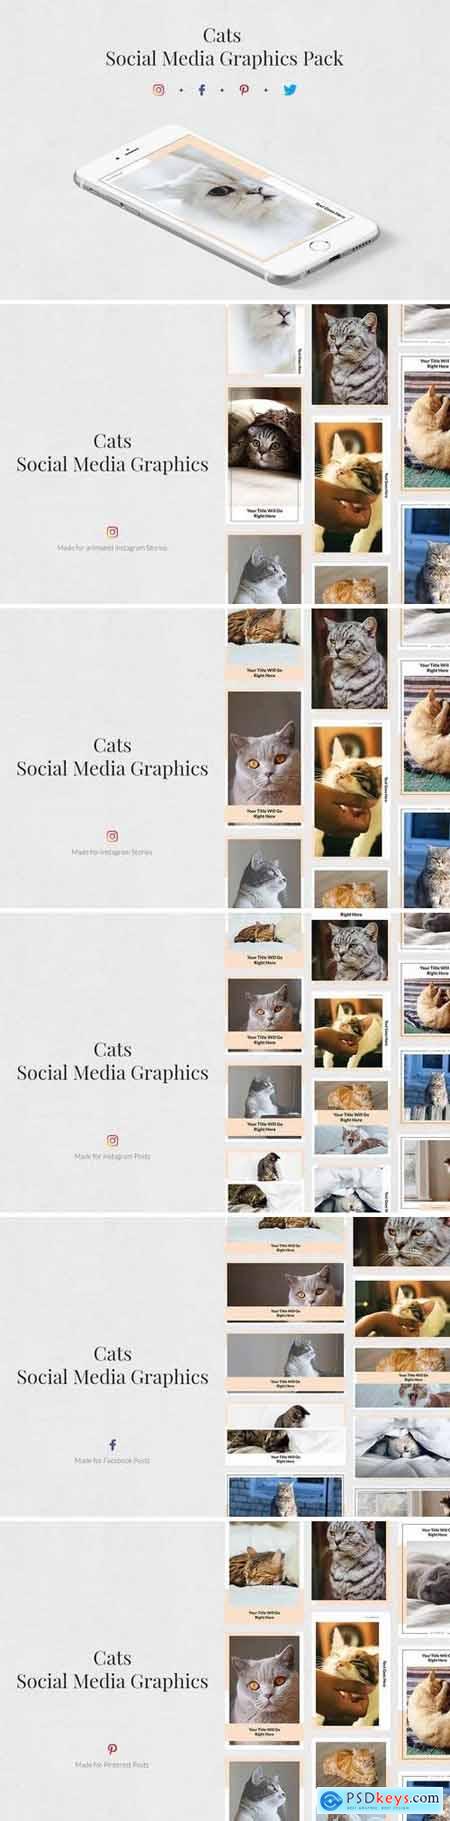 Cats Pack Social Media Template Bundle